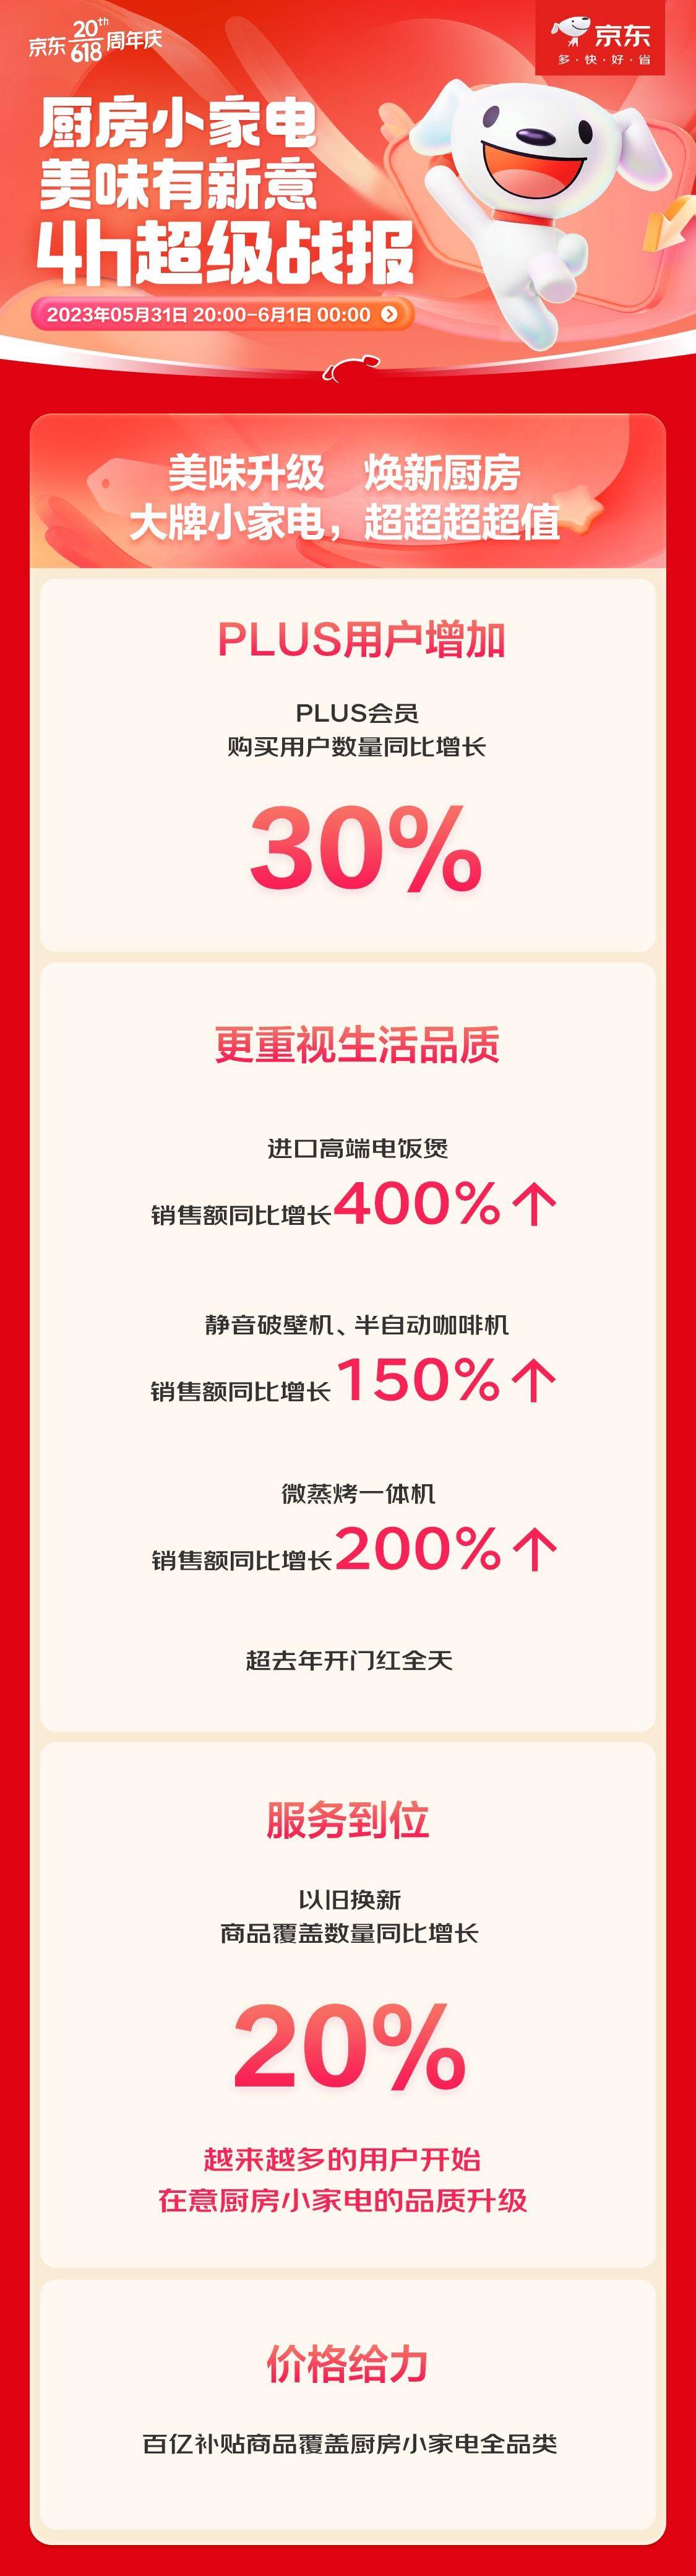 ky体育京东618厨房小家电品类爆发 微蒸烤一体机4小时销售额同比增长200%(图1)